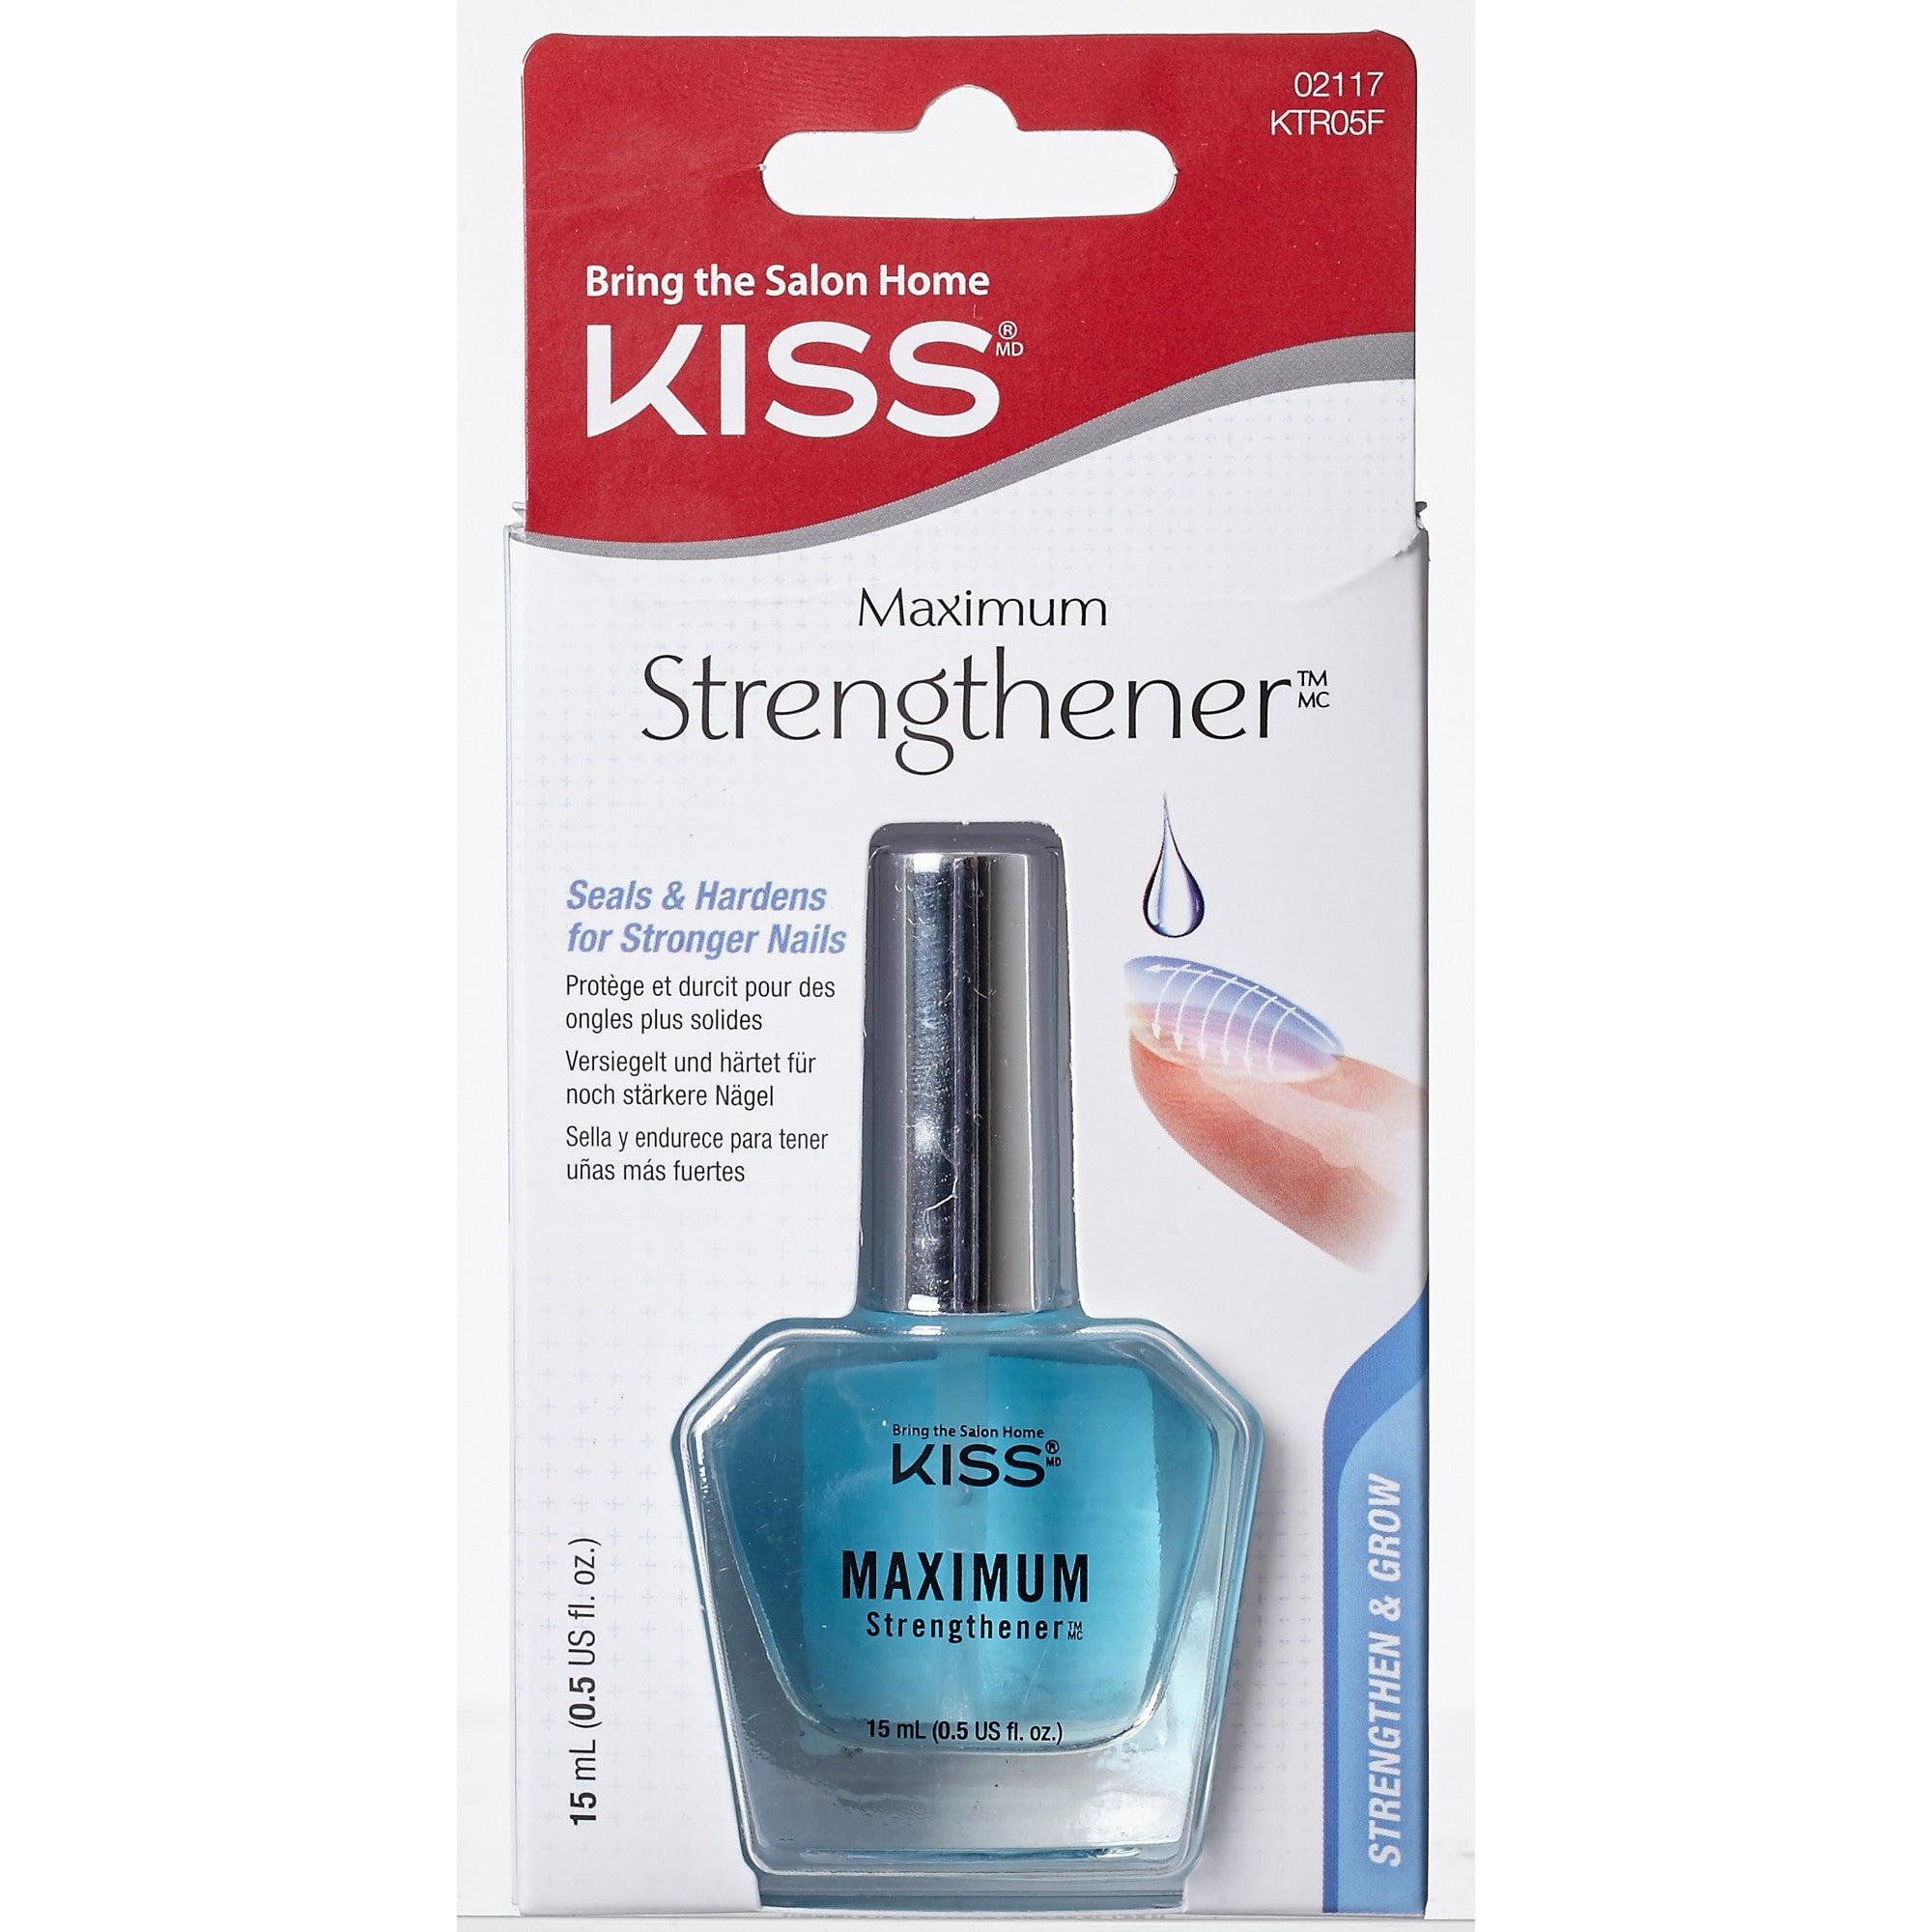 KISS Maximum Strengthener